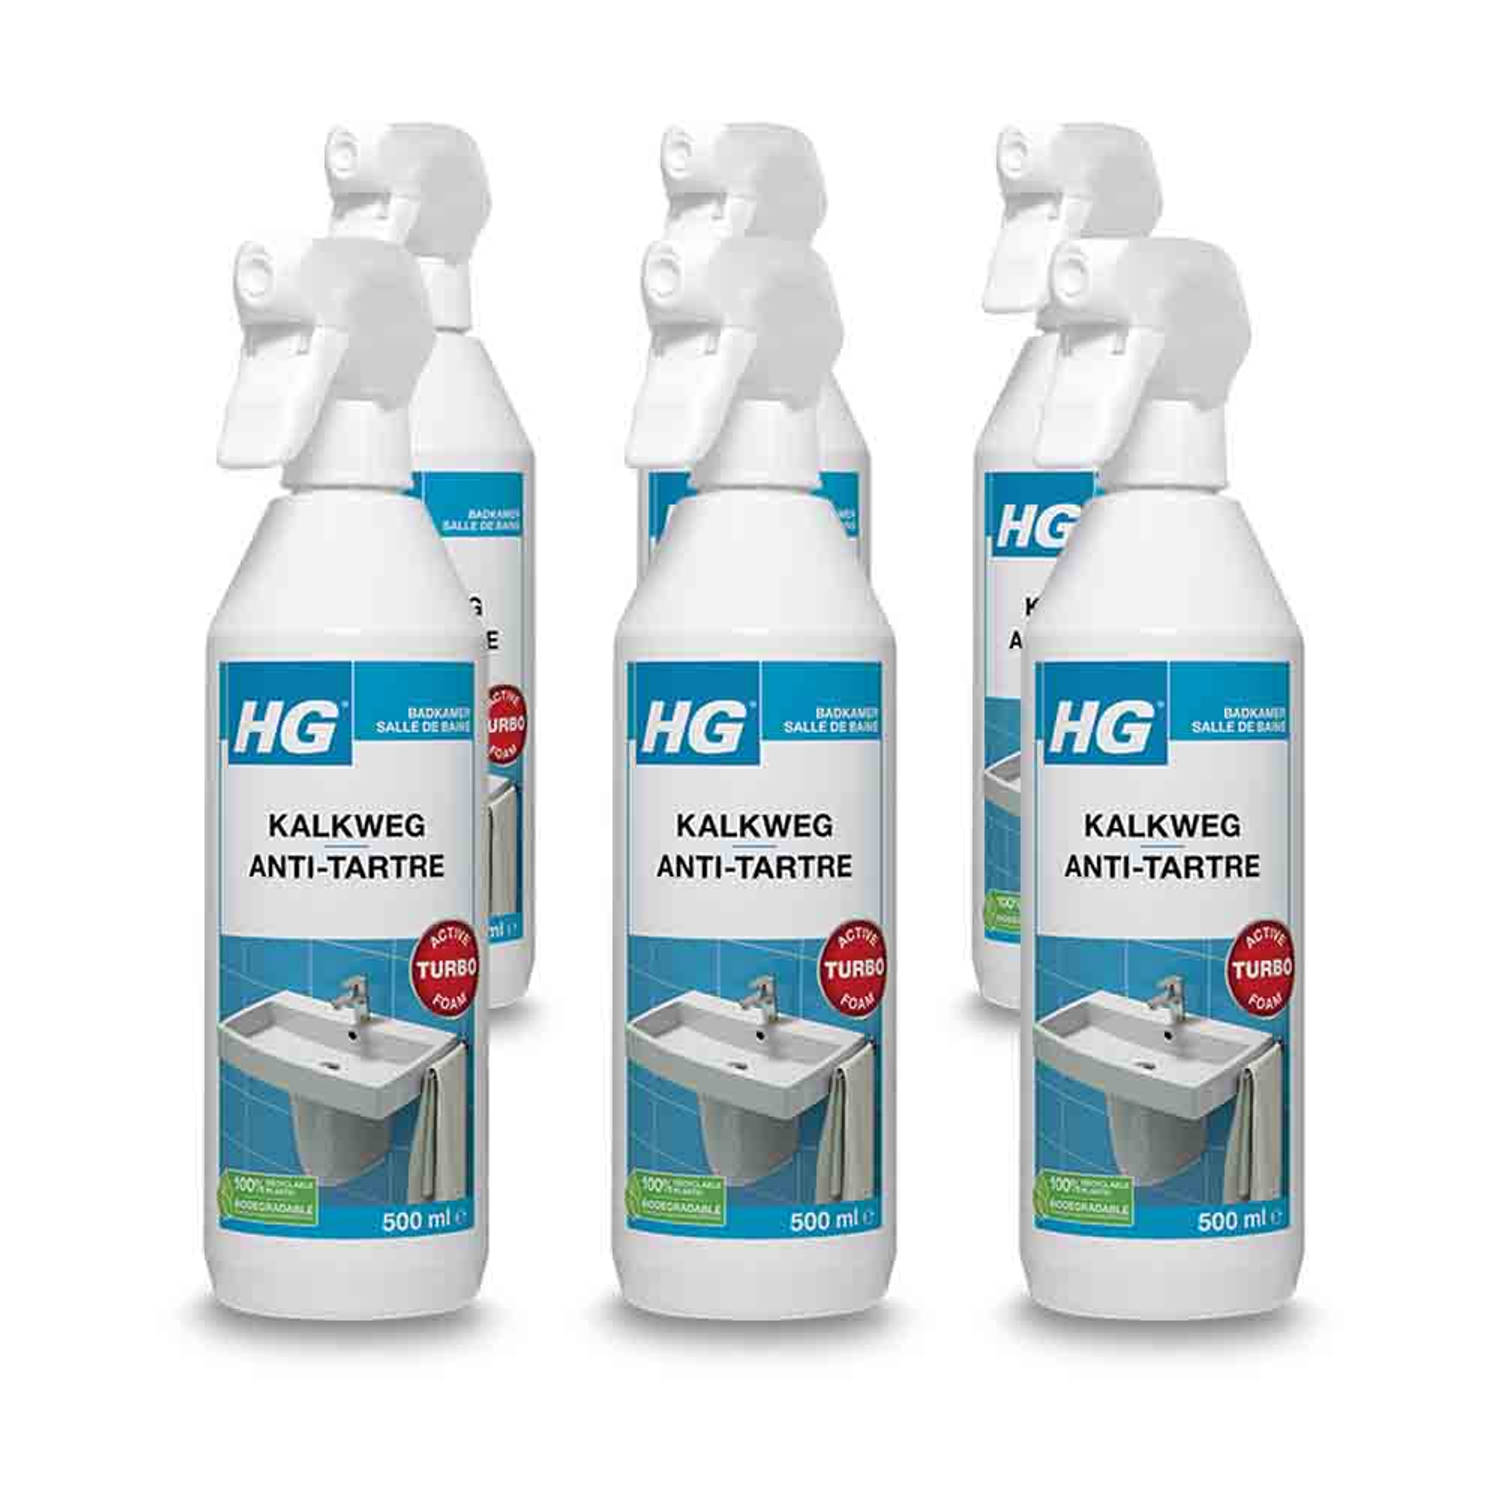 HG kalkweg schuimspray 500 ml - 6 stuks